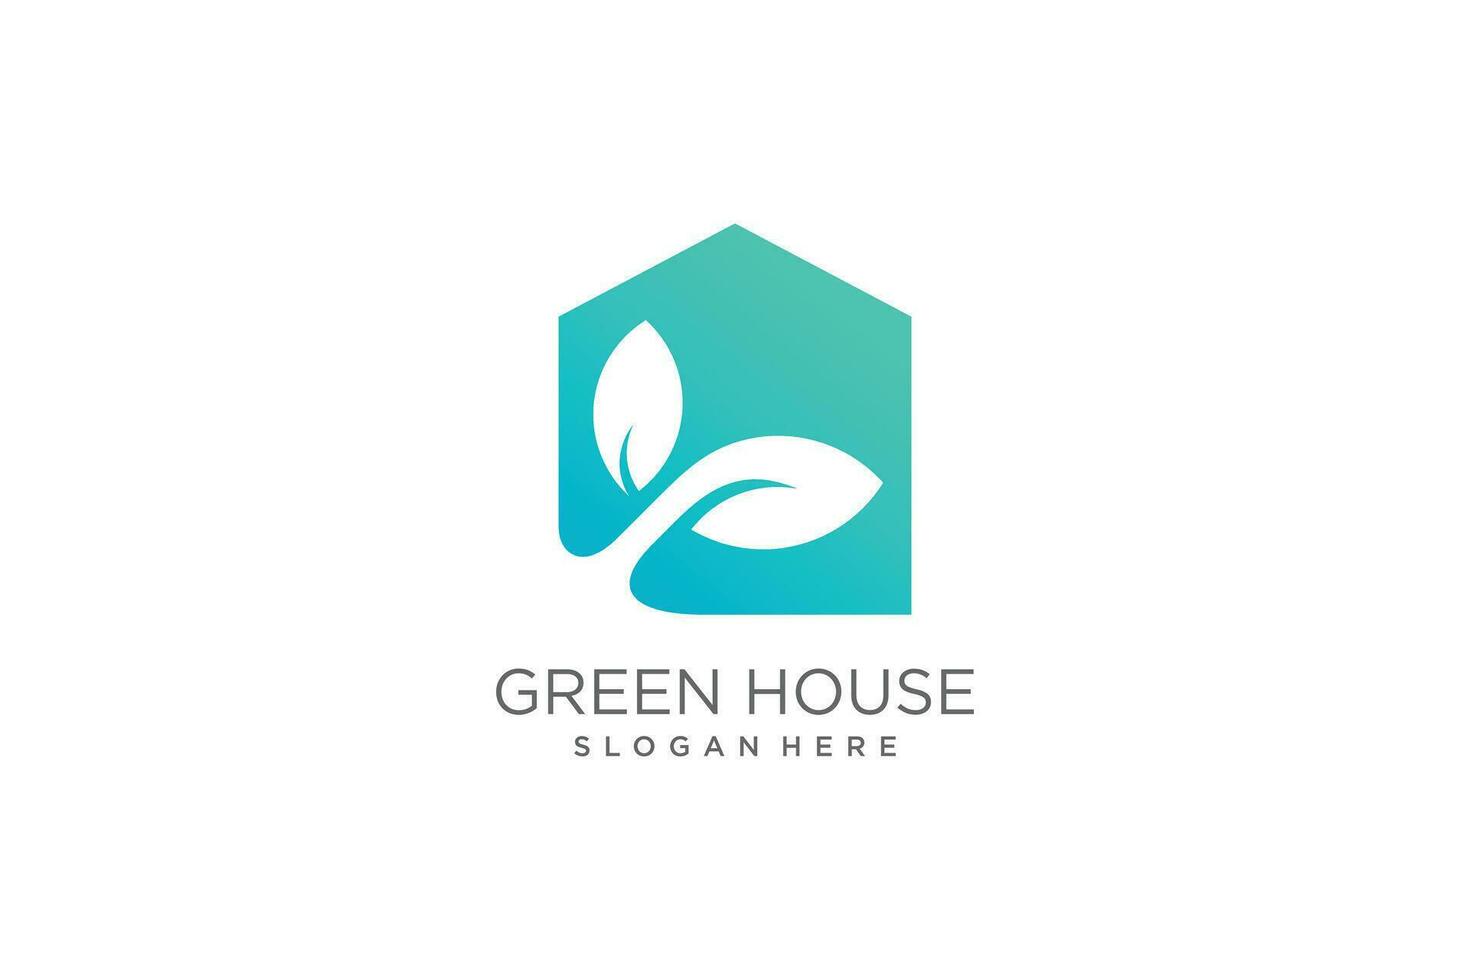 Green house logo illustration modern creative unique vector